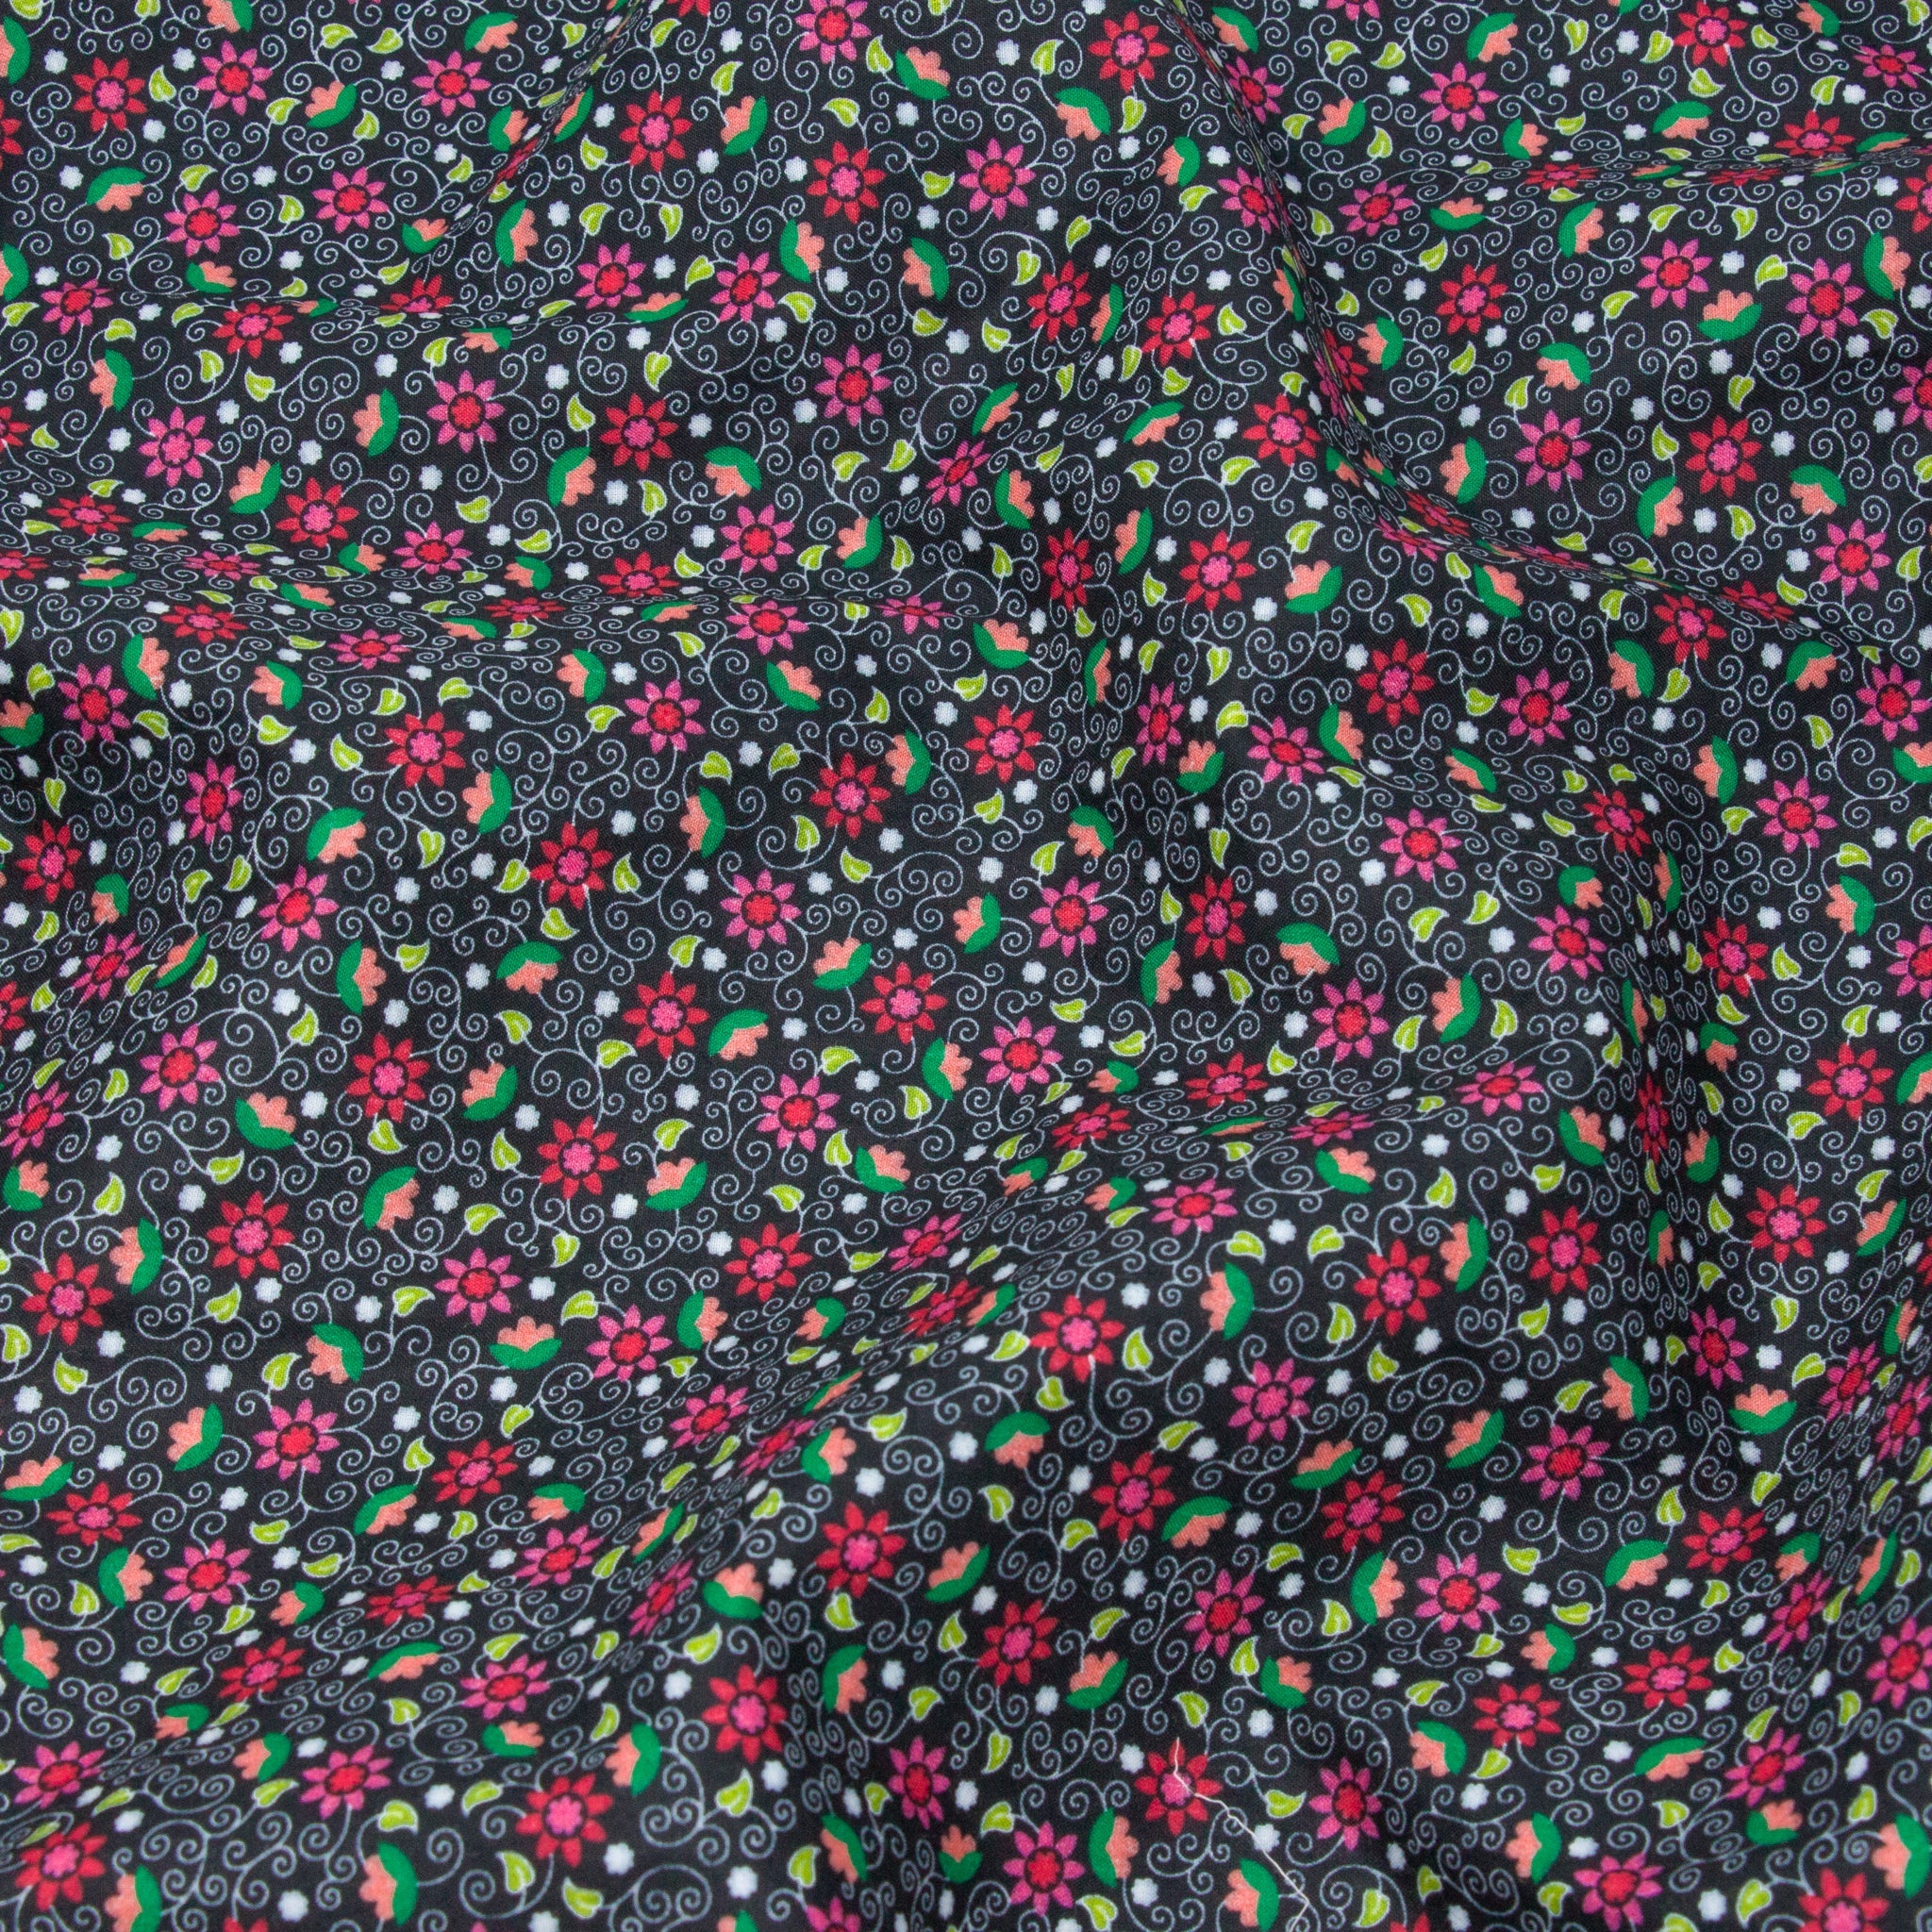 London Calling Cotton Lawn Flowers Black ½ yd-Fabric-Spool of Thread